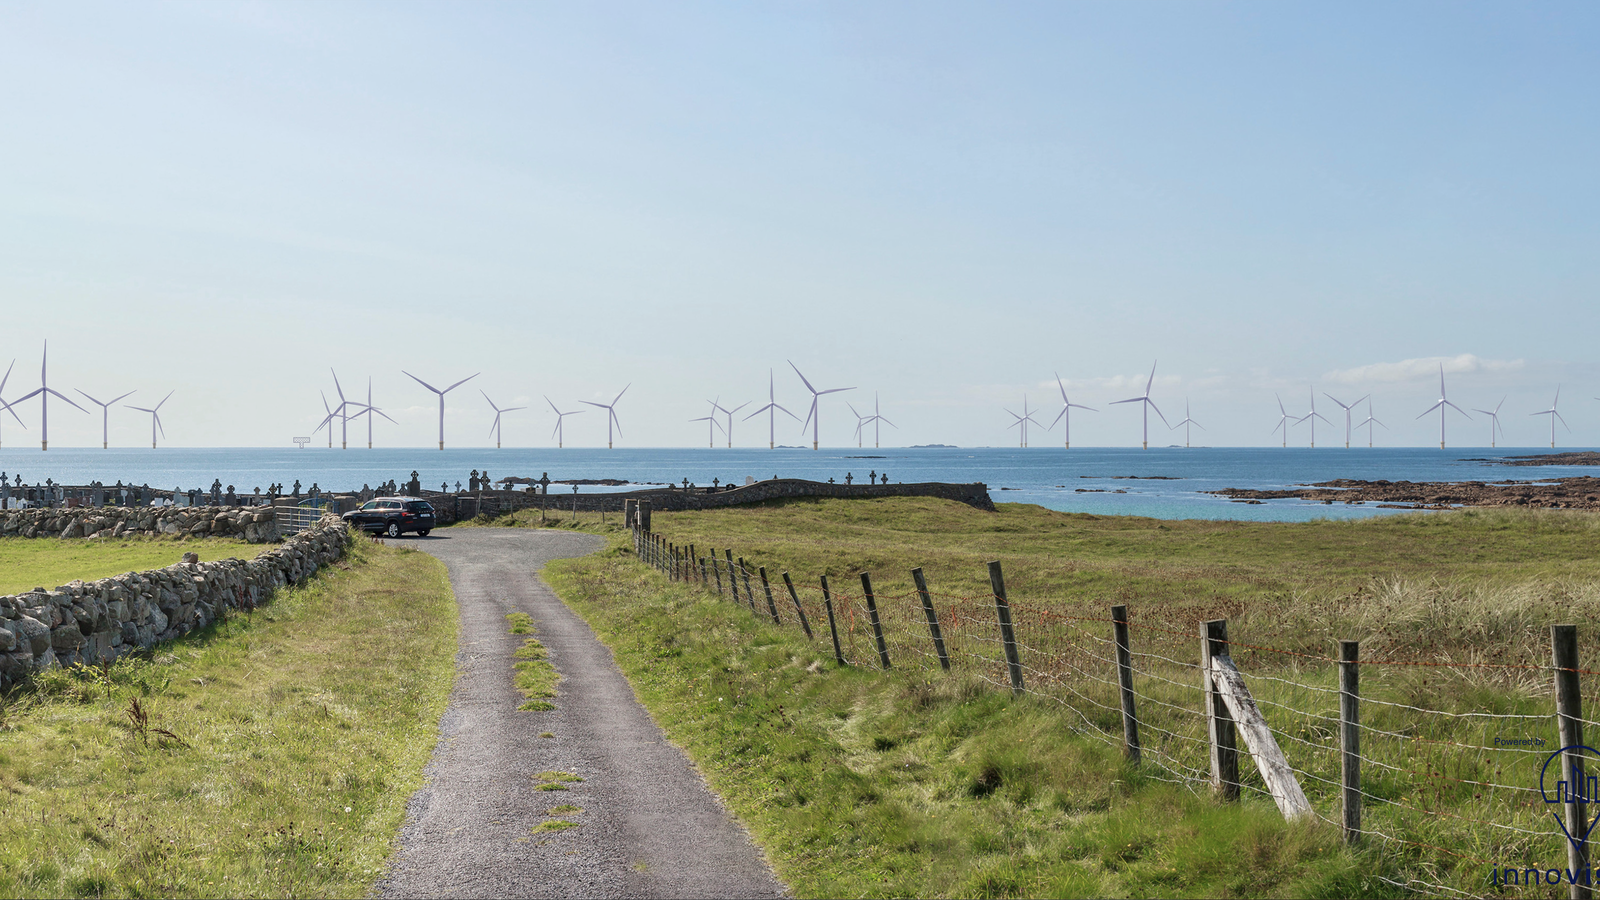 Wind farm proposed for off the coast of Connemara